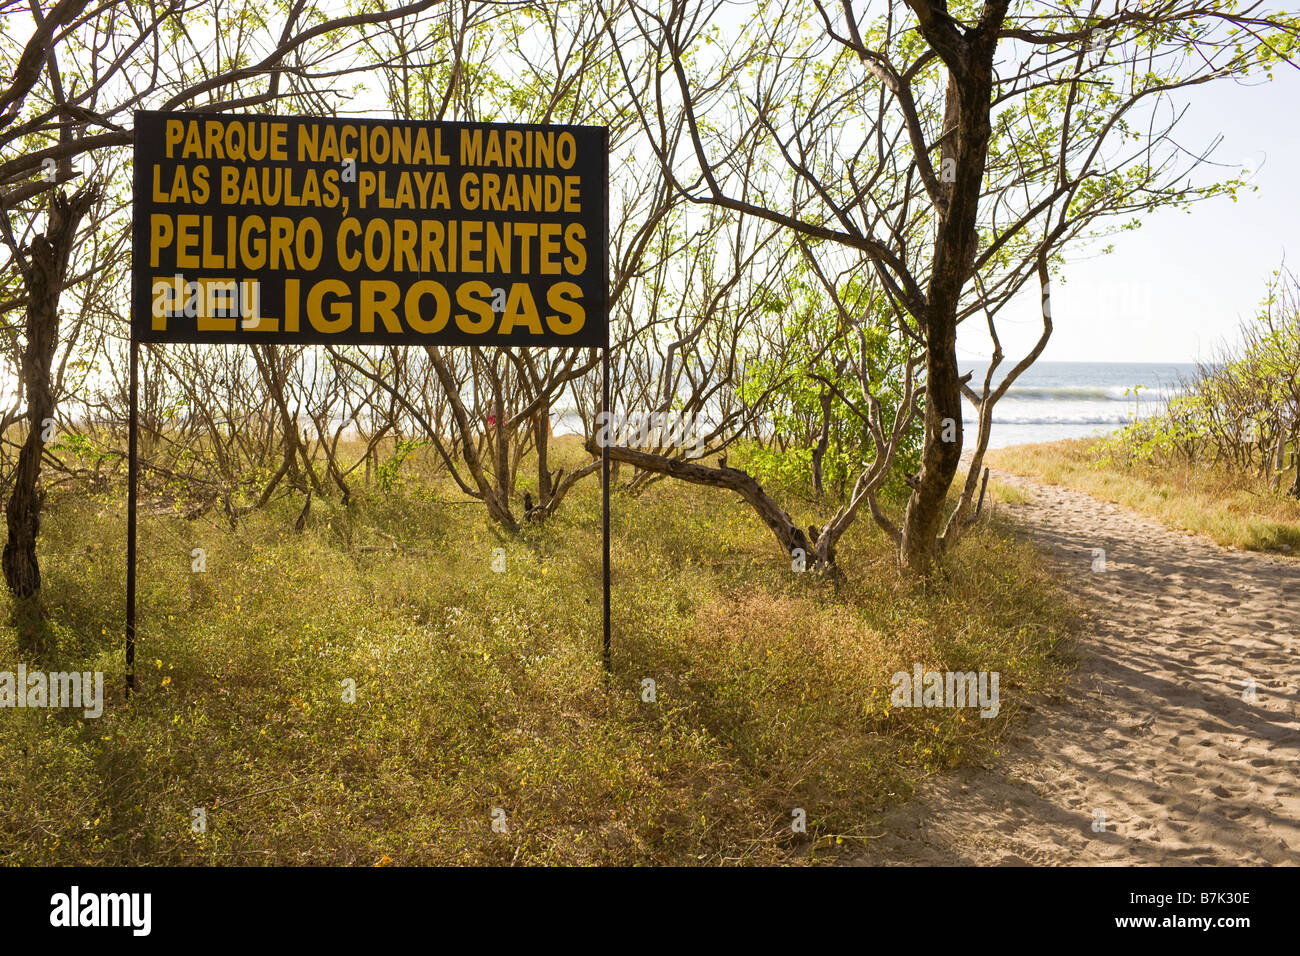 Entrance sign warning of dangerous currents at the Parque Nacional Marino  (Marine National Park) Las Baulas in Playa Grande, Costa Rica Stock Photo -  Alamy